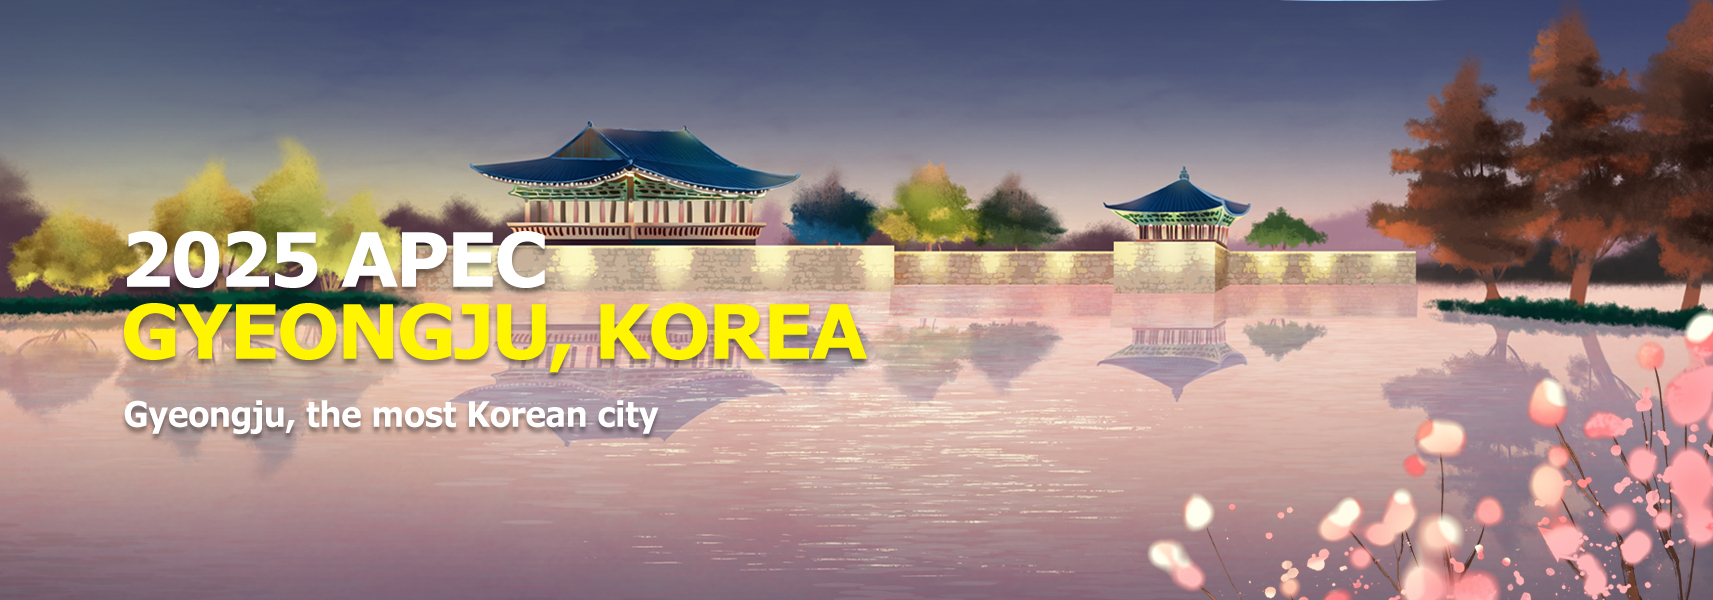 2025 APEC GYEONGJU, KOREA - Gyeongju, the most Korean city